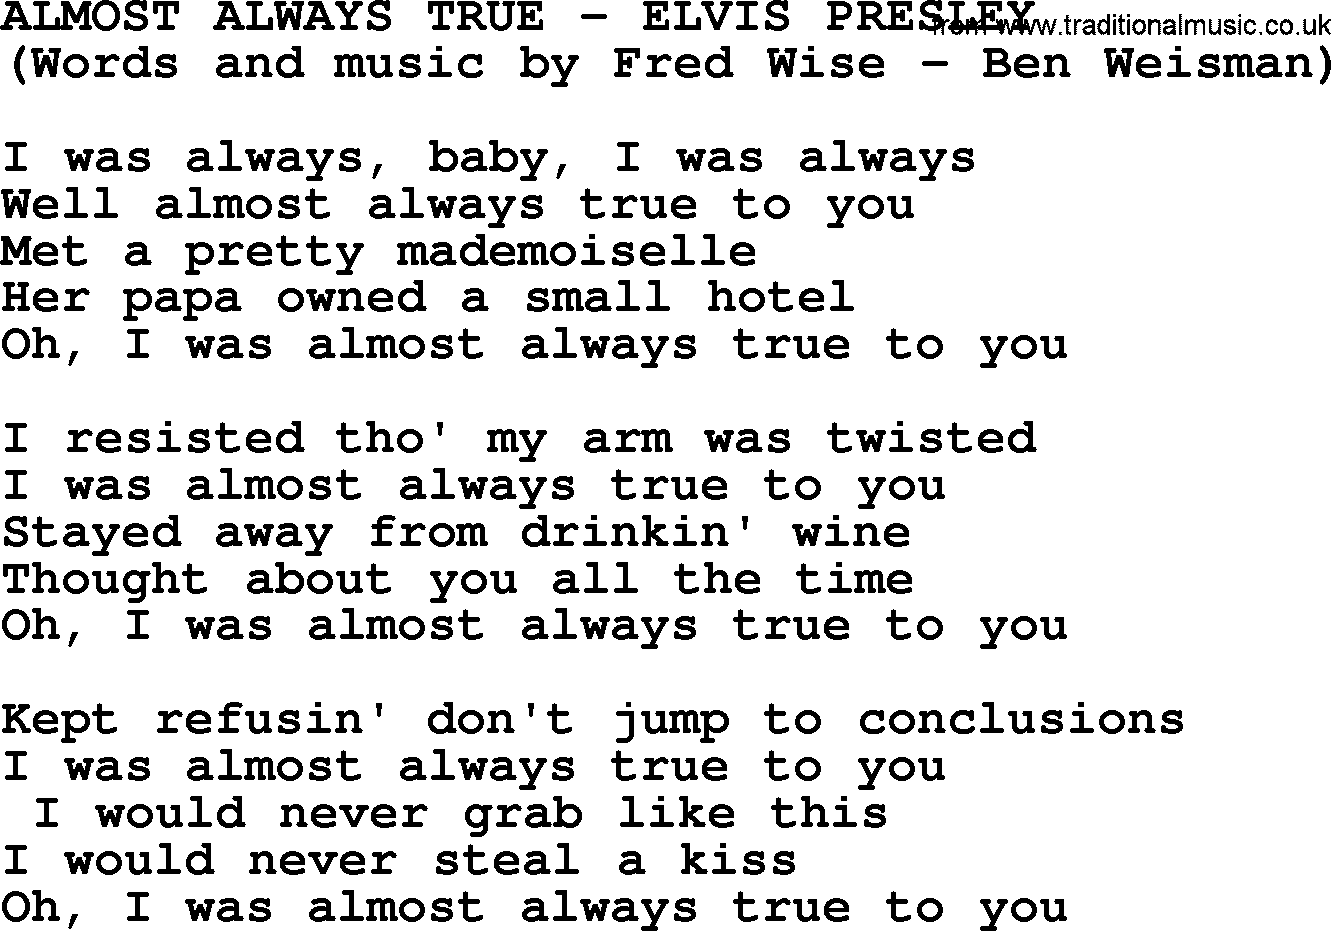 Elvis Presley song: Almost Always True lyrics